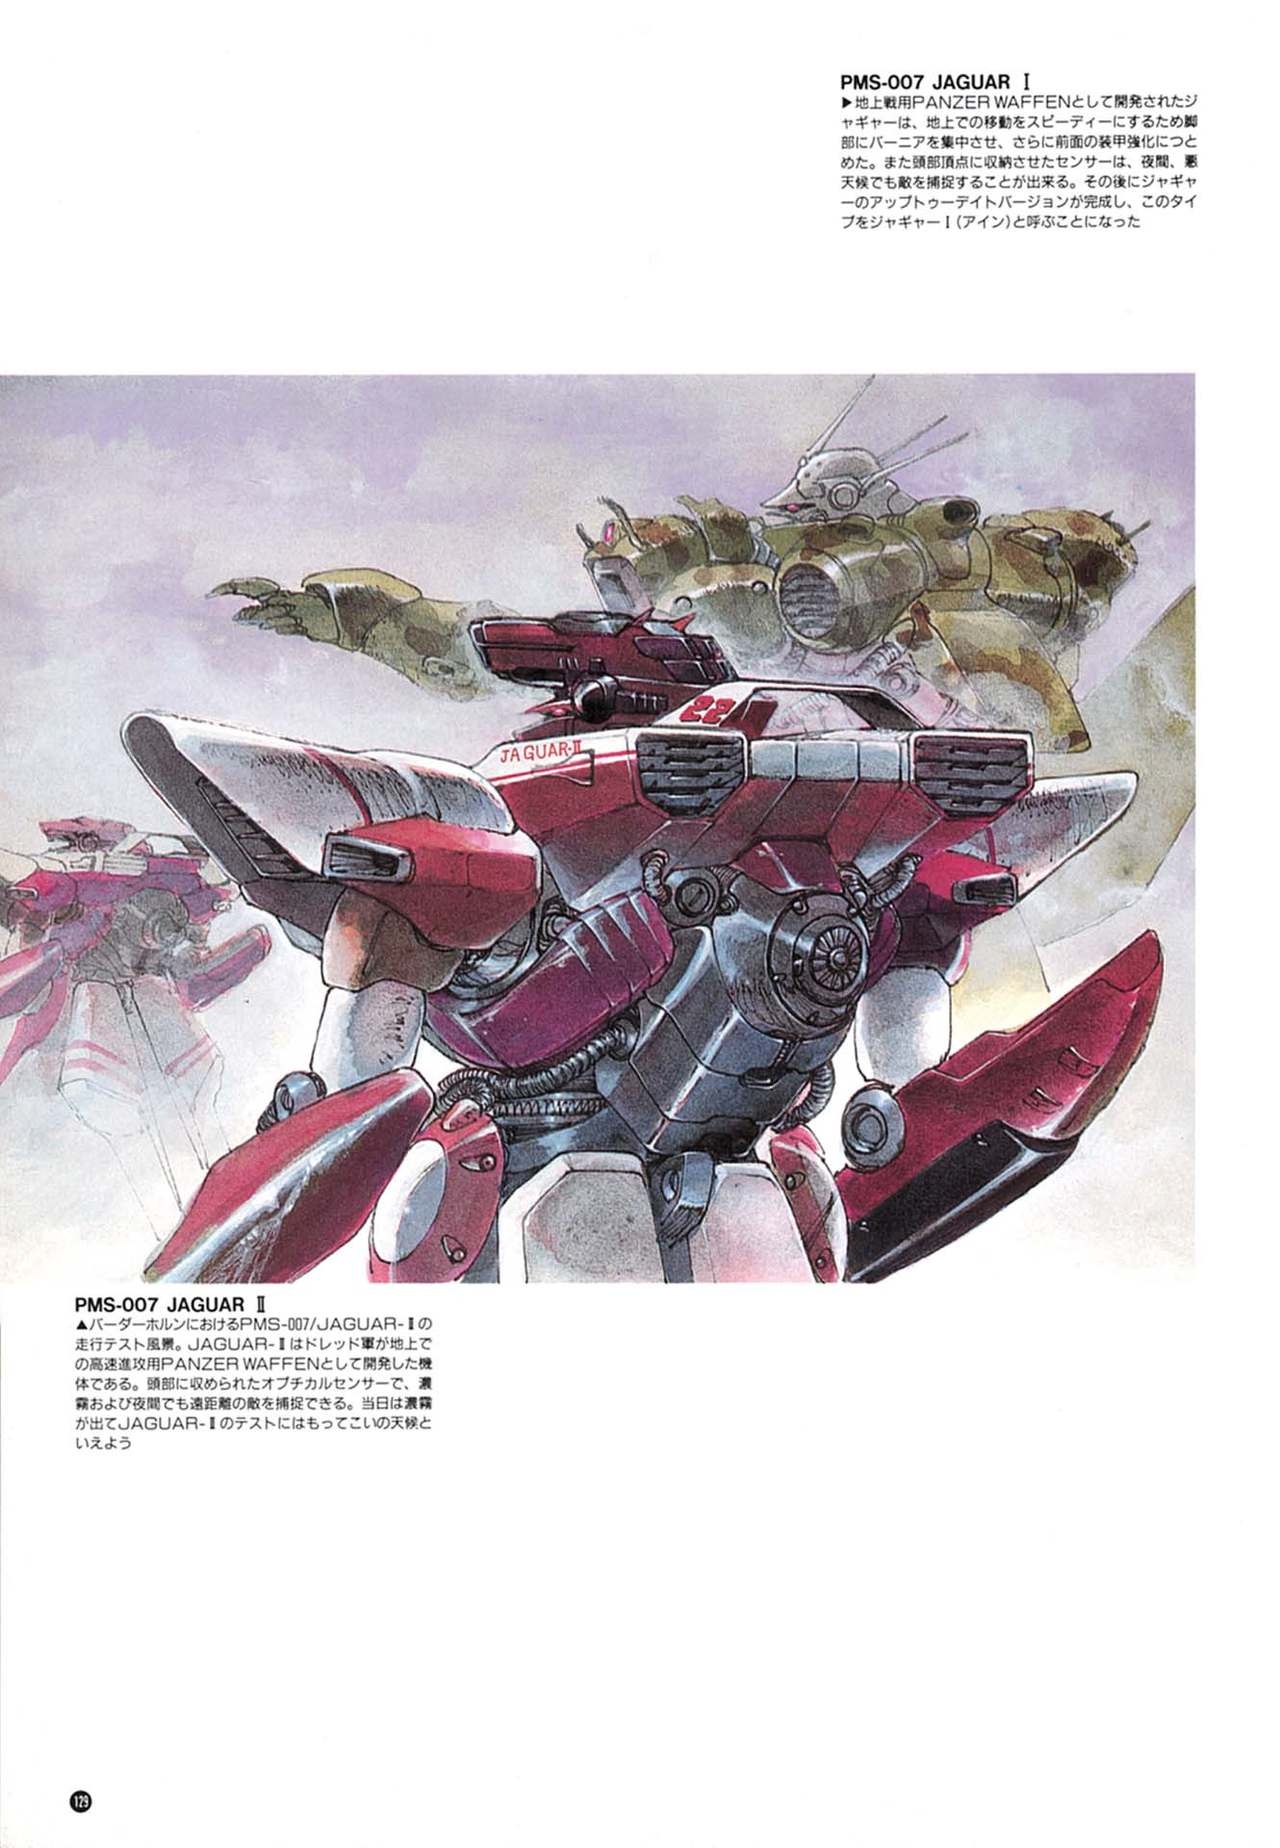 [Kazuhisa Kondo] Kazuhisa Kondo 2D & 3D Works - Go Ahead - From Mobile Suit Gundam to Original Mechanism 128